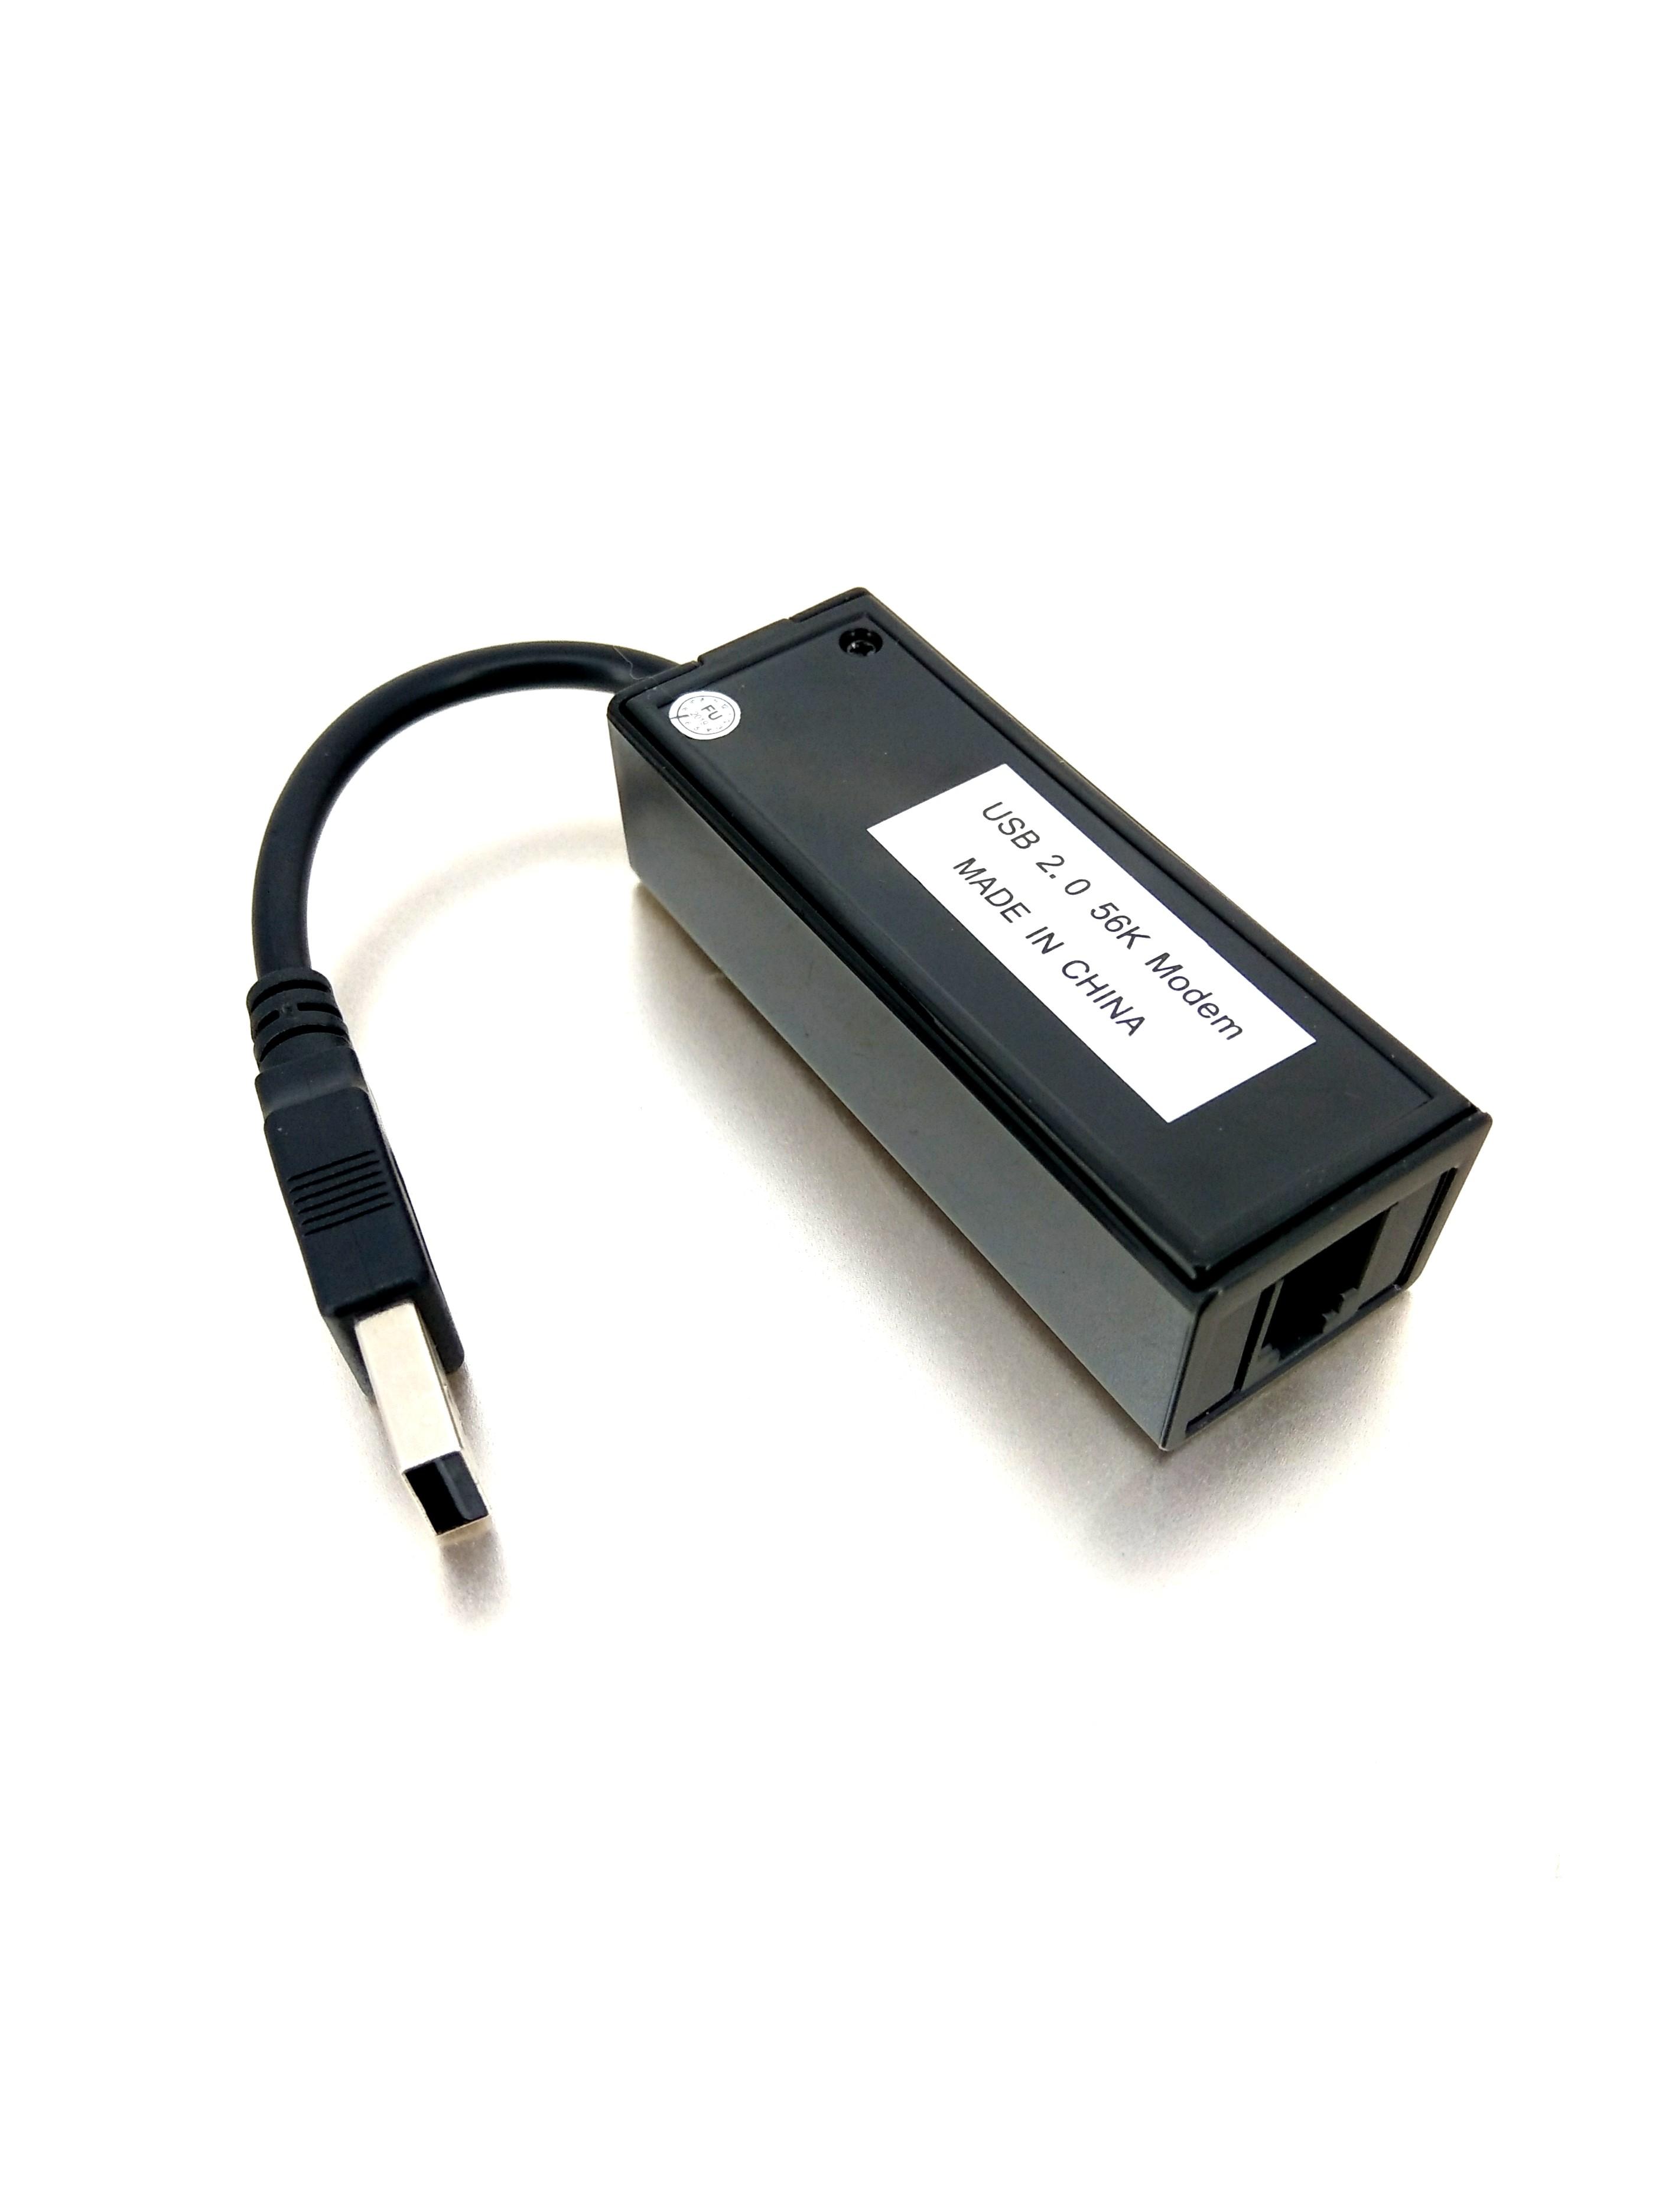 tramo Flecha imperdonable 56K外置式USB介面數據機External USB 56K Fax Modem, 電腦＆科技, 電腦周邊及配件, 硬碟及儲存器- Carousell